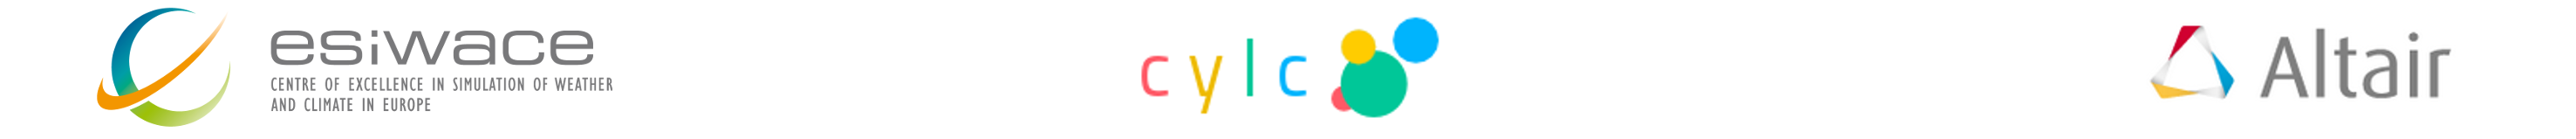 ESiWACE - Cylc - Altair Logos